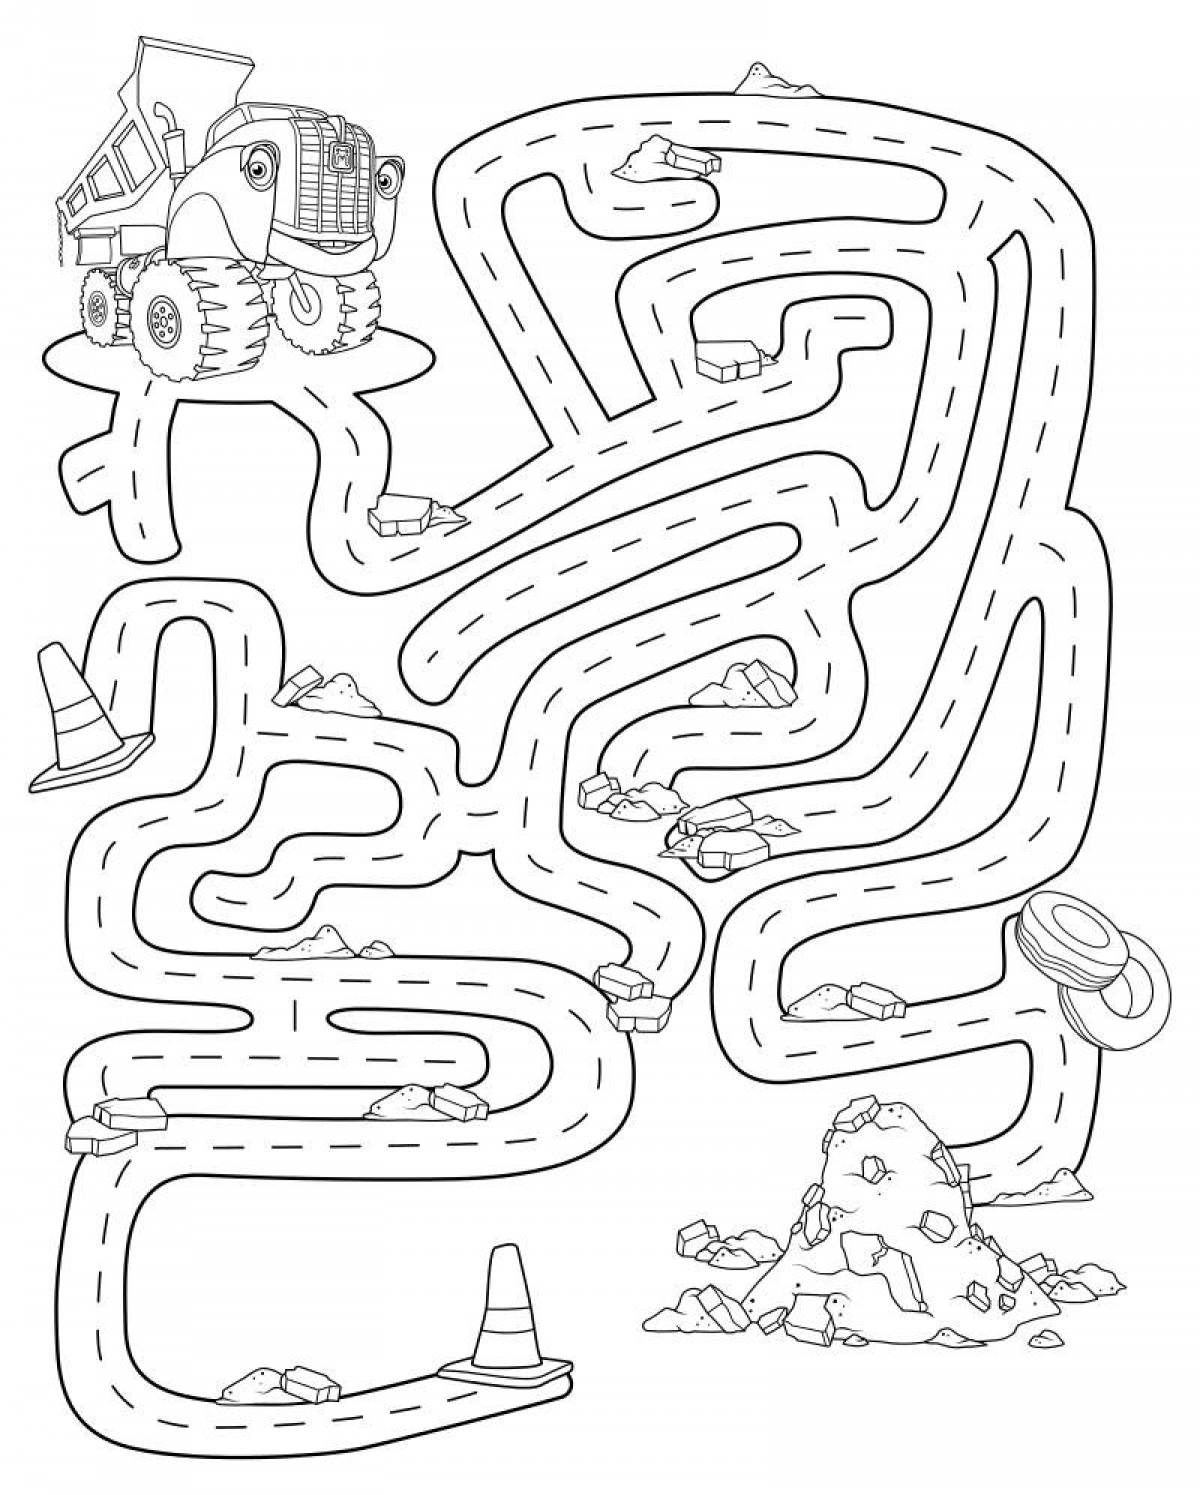 Delightful maze coloring book